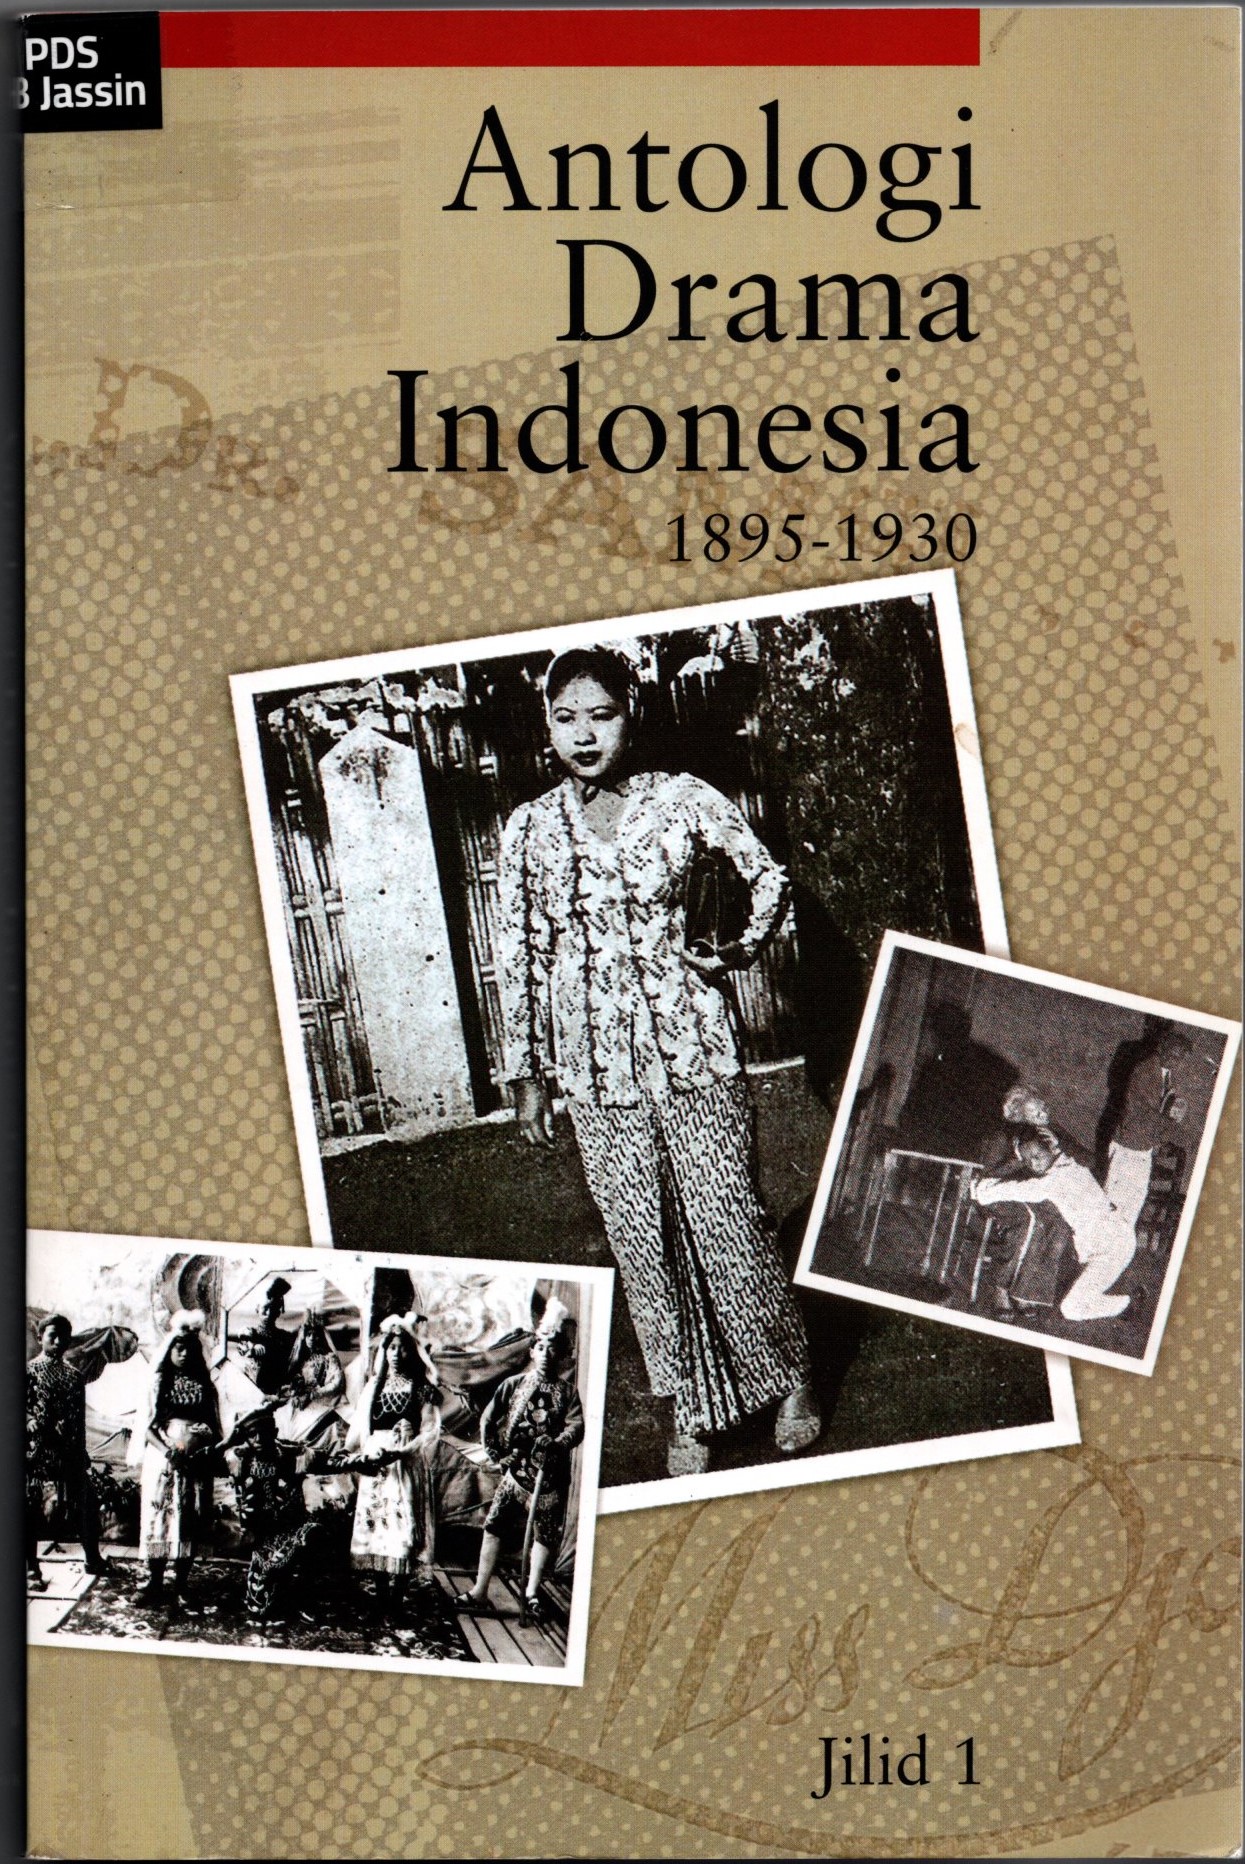 Antologi drama Indonesia Jilid 1 :  1895-1930